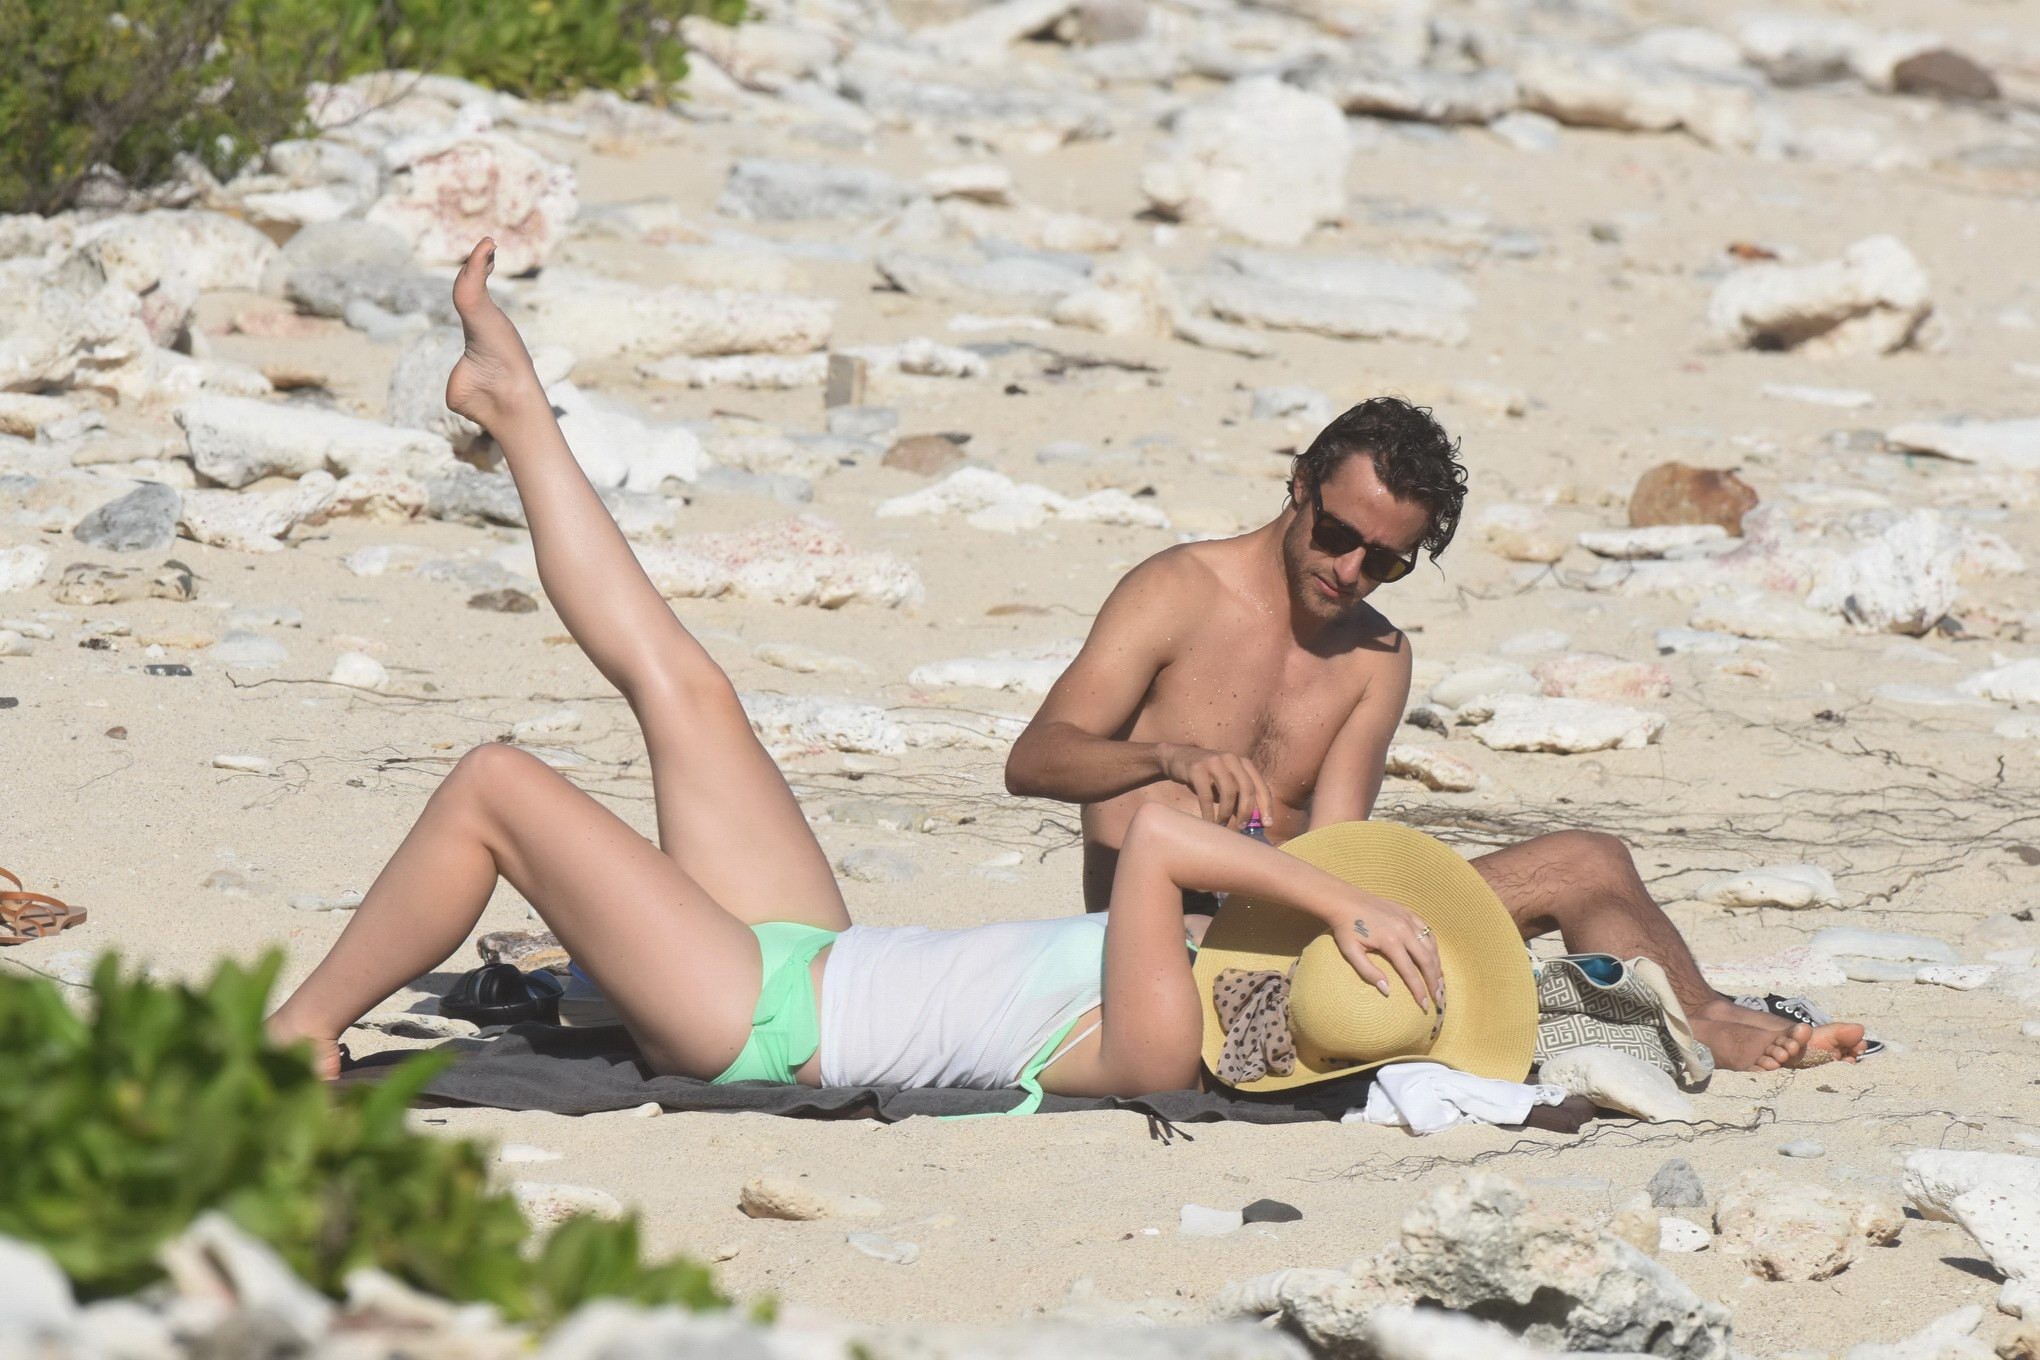 Lana del rey portant un bikini vert sur la plage de st barts
 #75176929